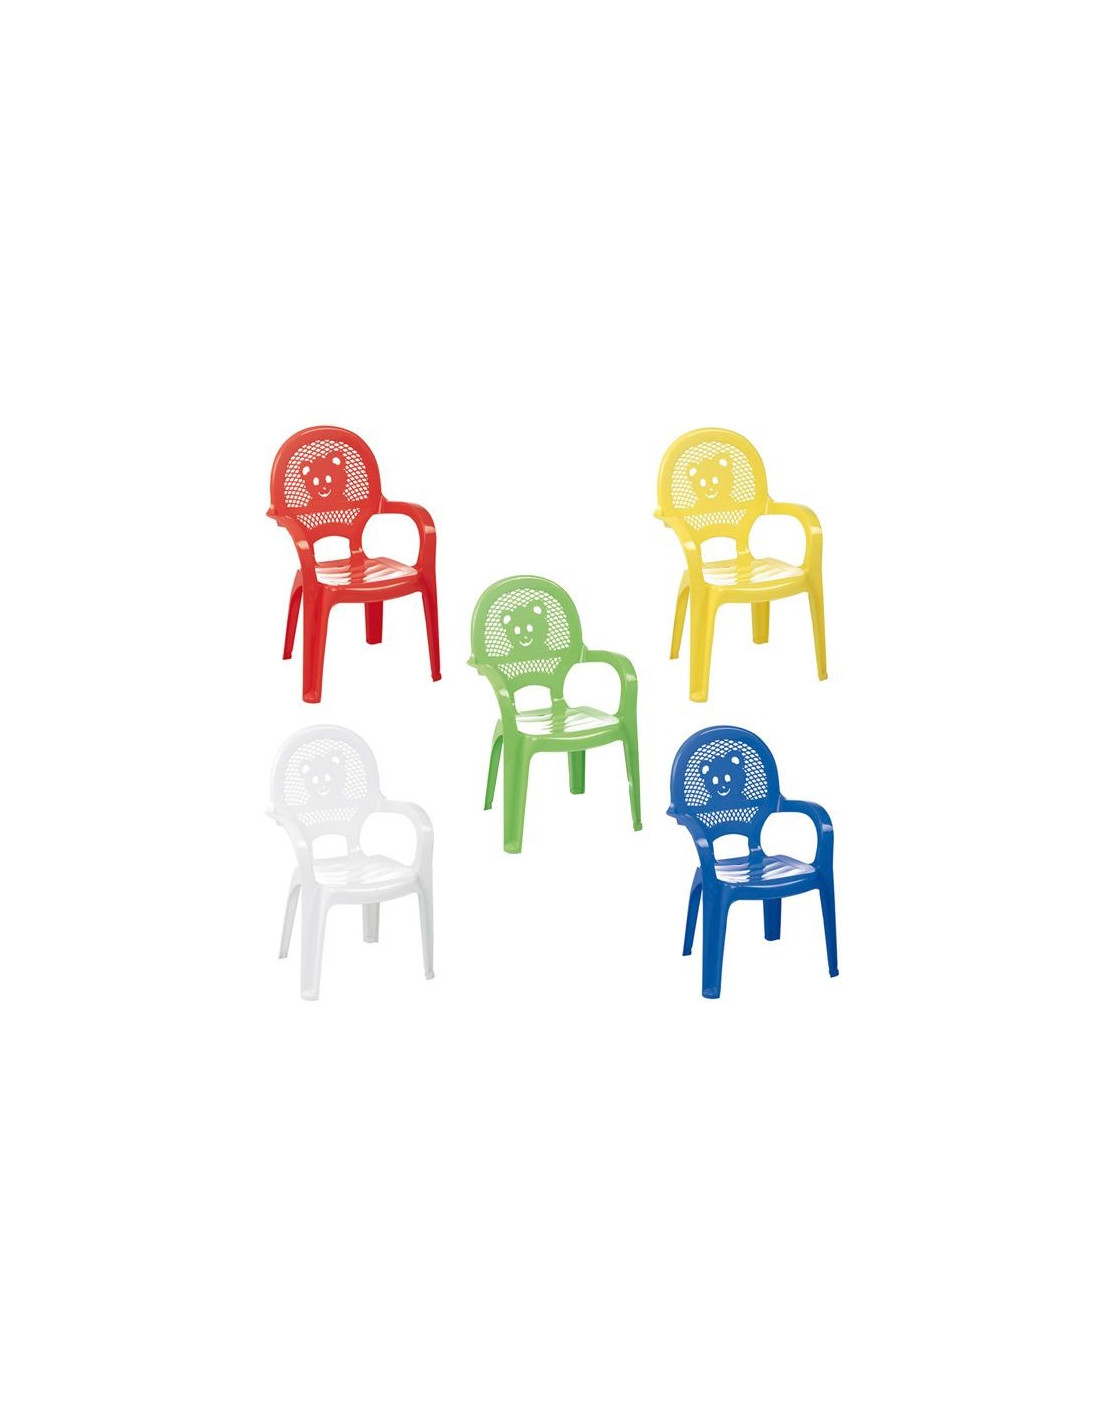 Silla de Plástico Infantil Varios Colores de 38 x 38 x 53 Centímetros